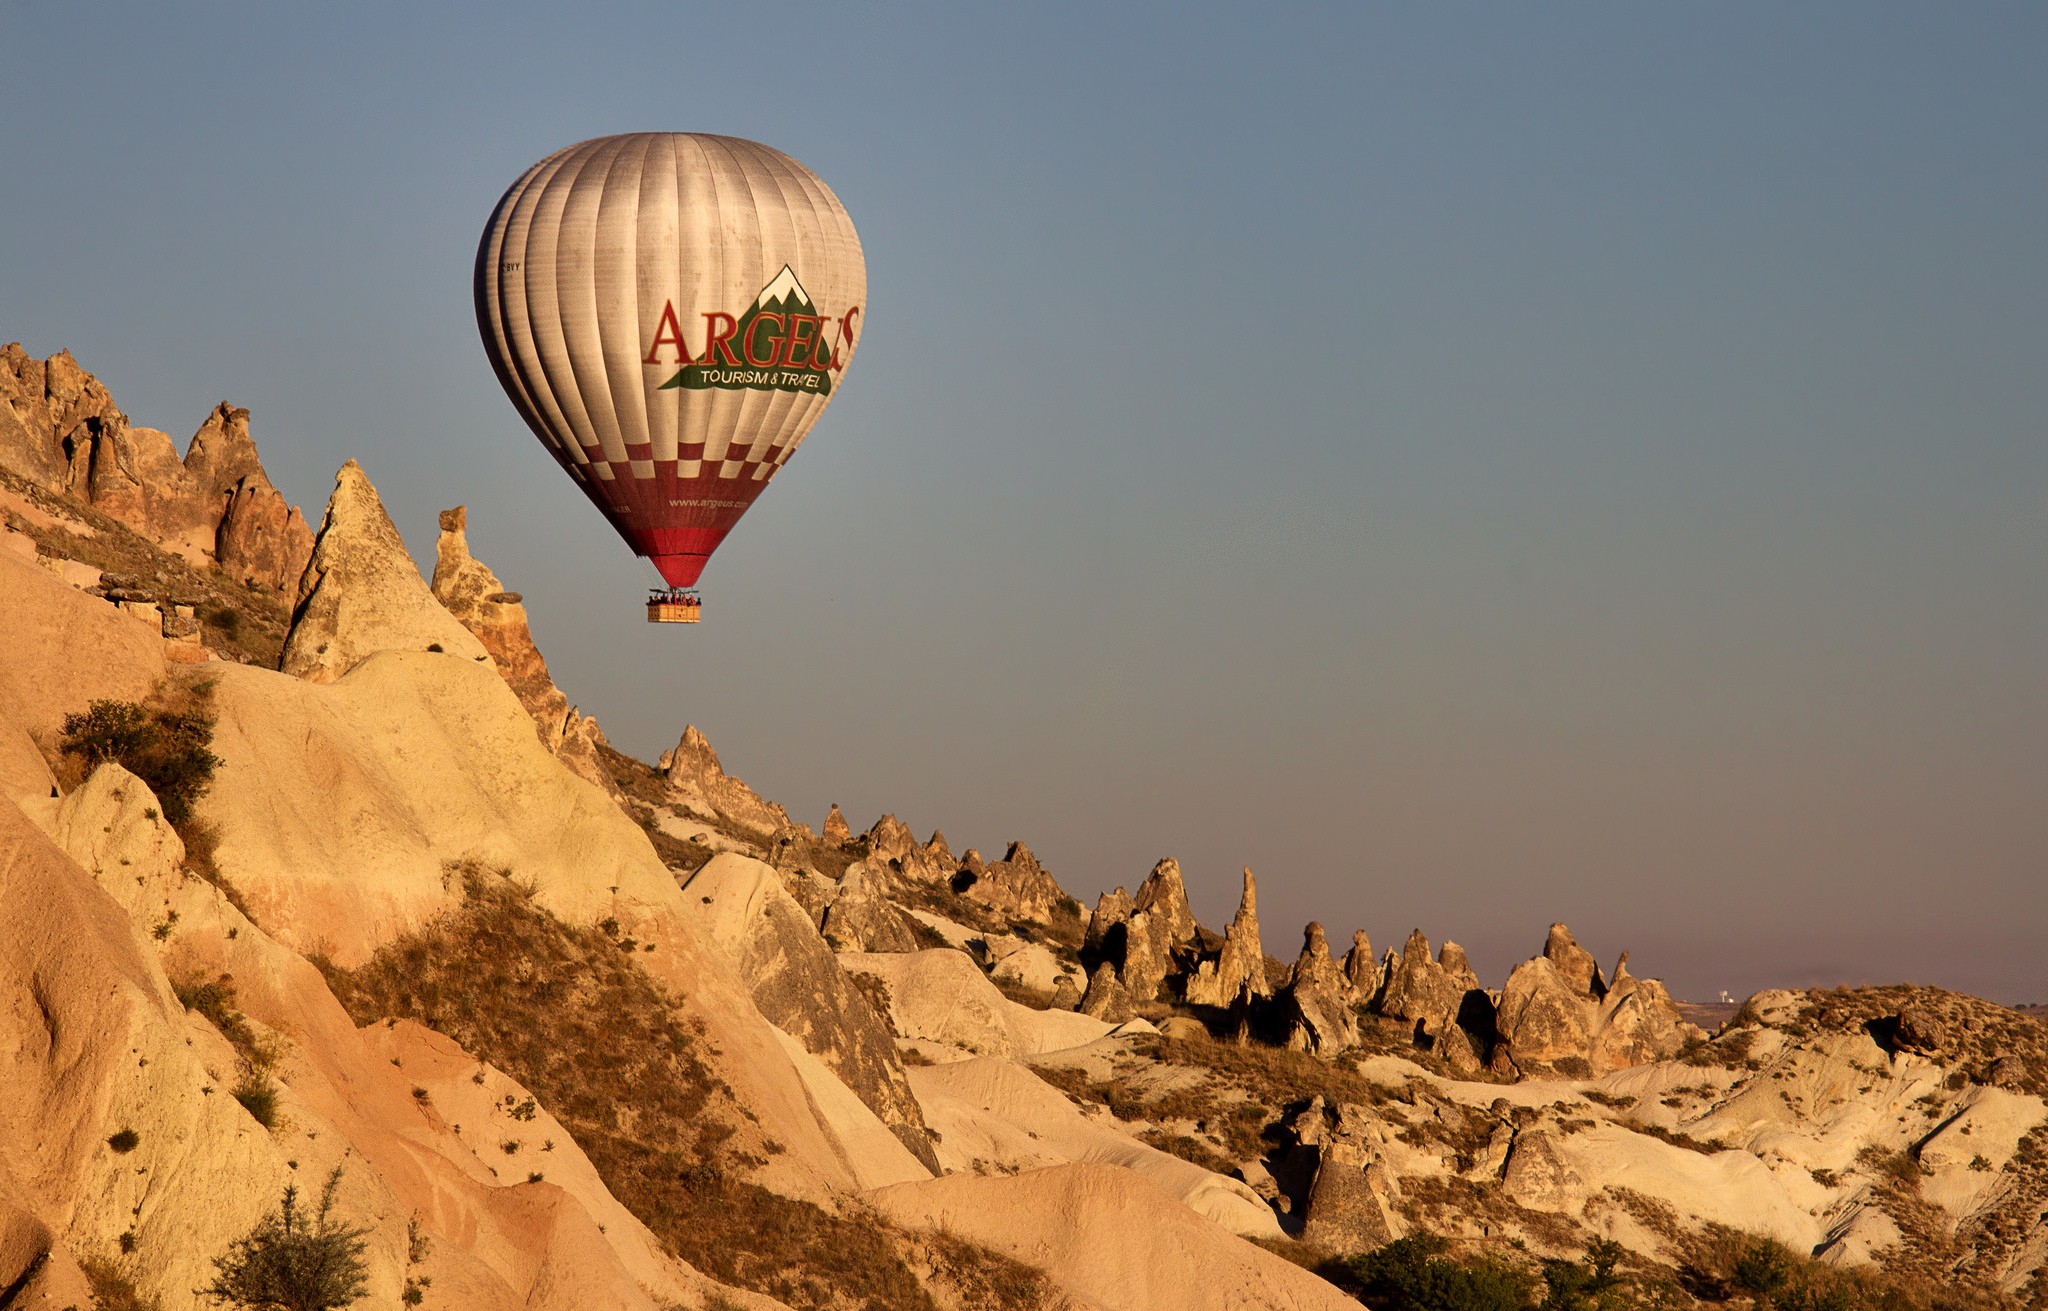 General 2048x1311 Cappadocia rock formation landscape hot air balloons vehicle nature rocks